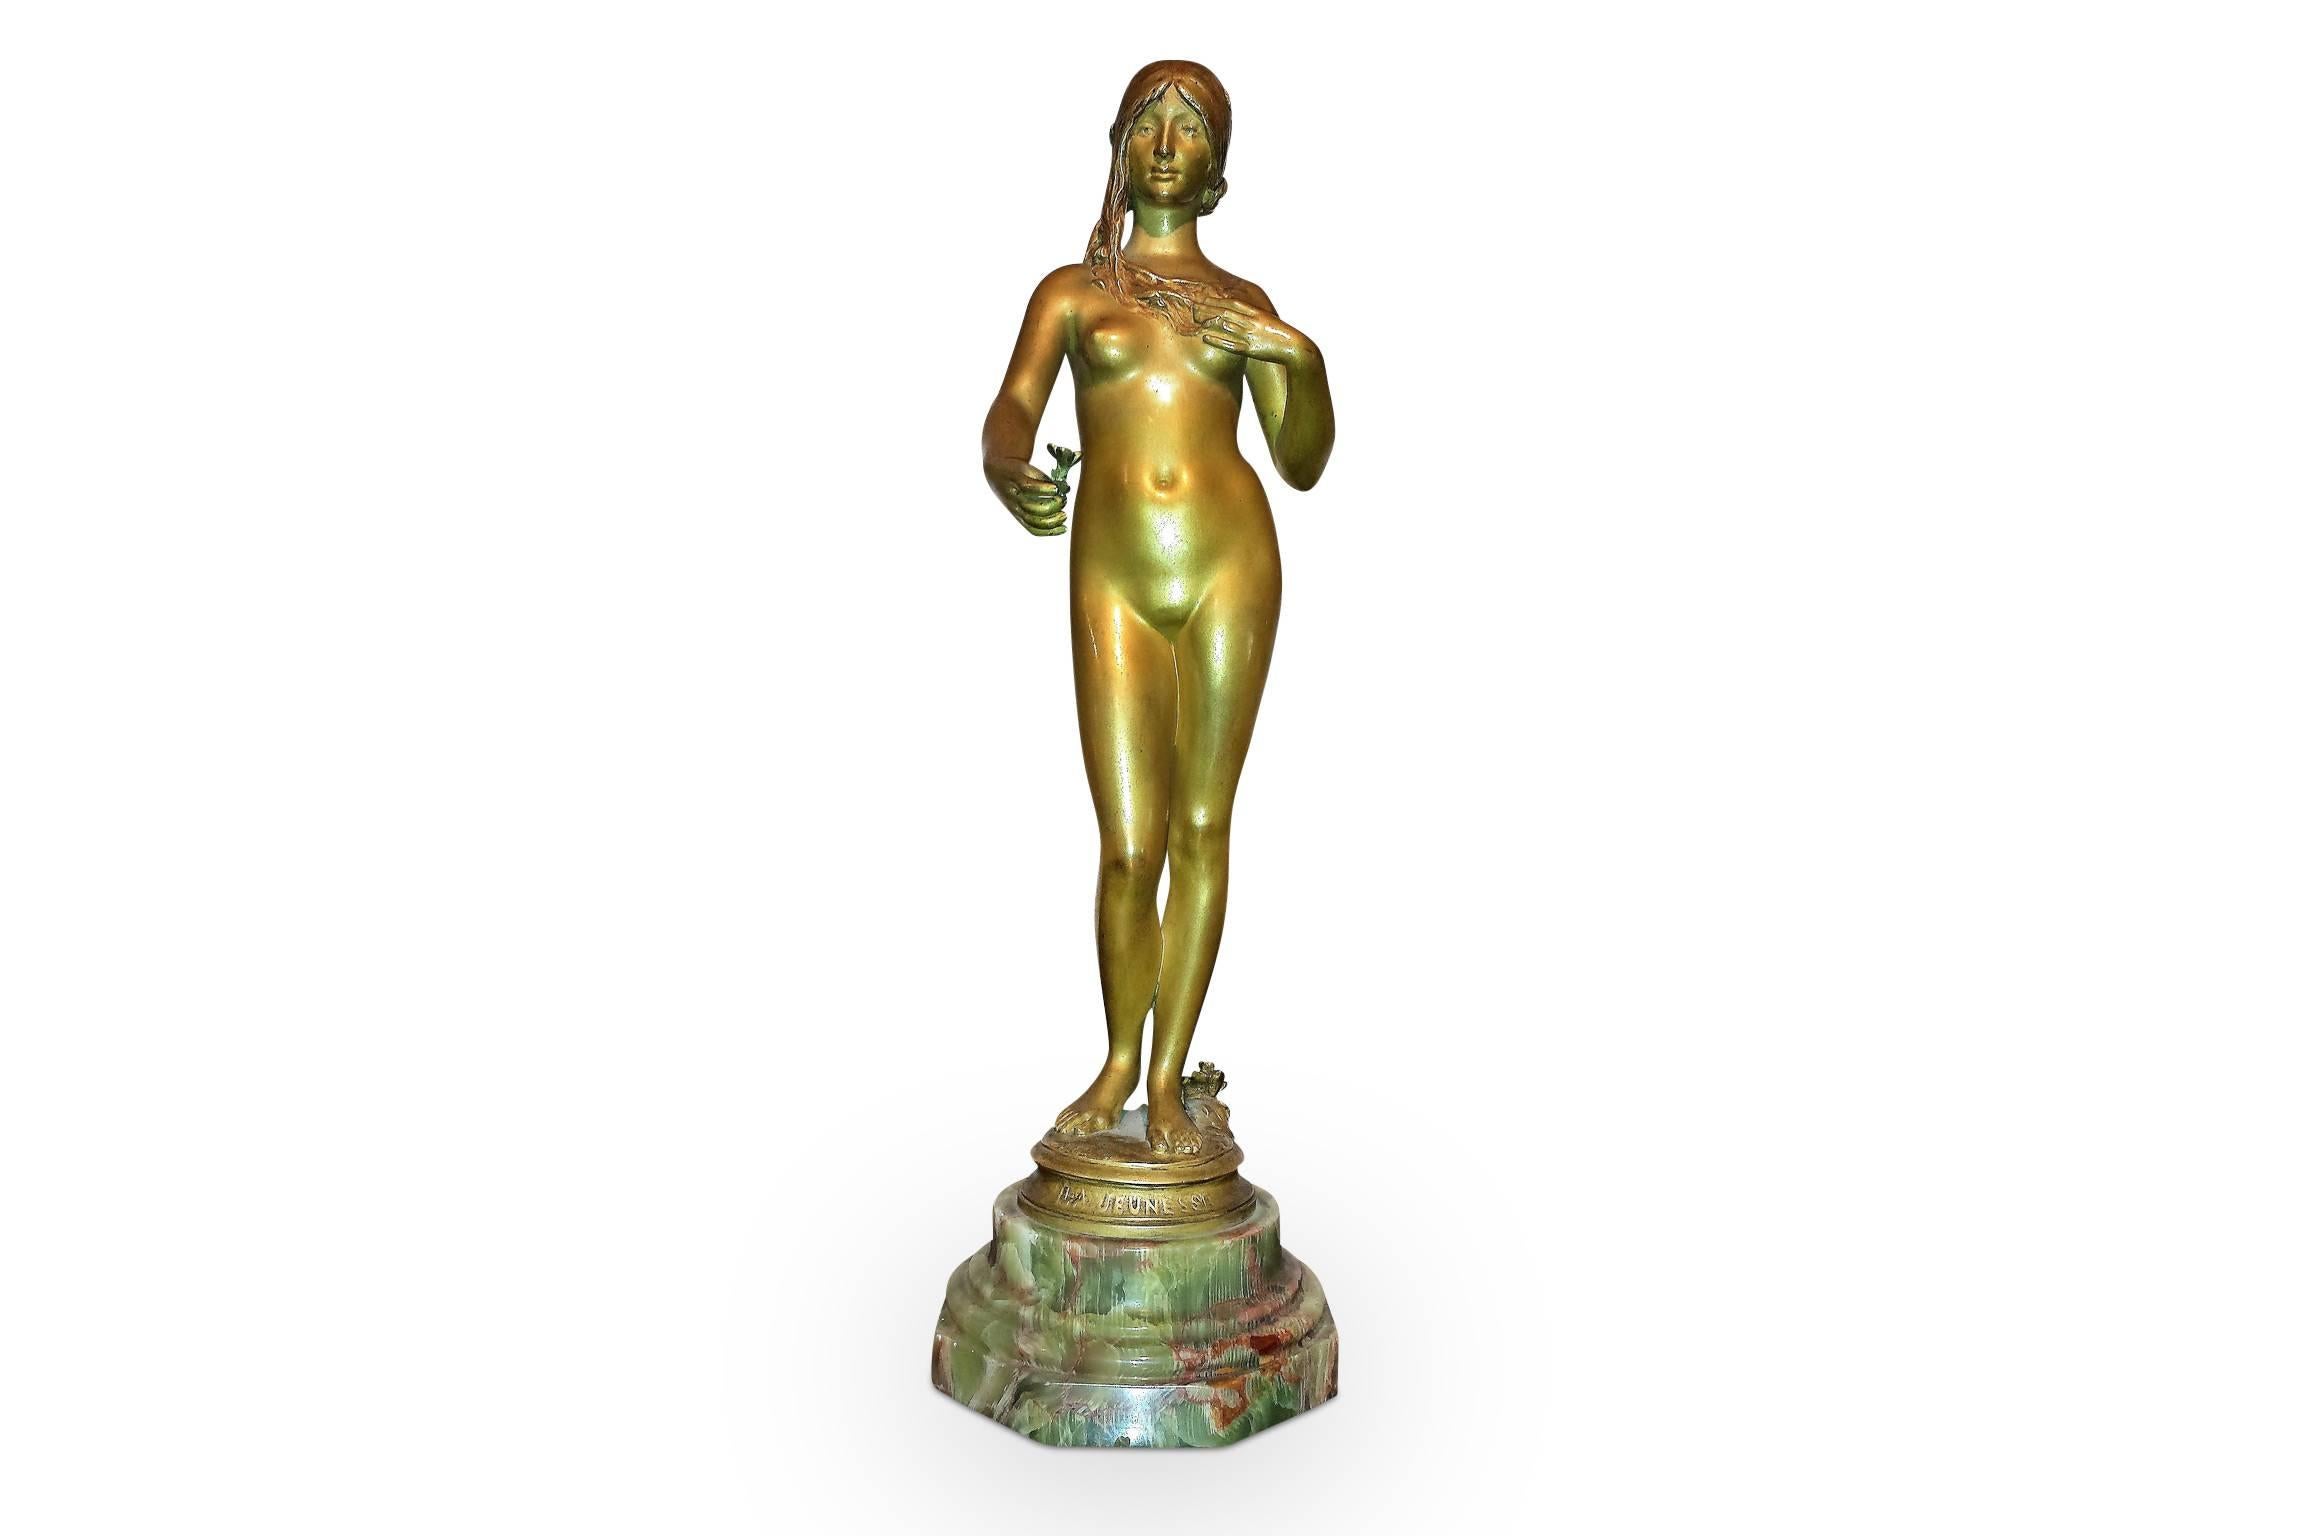 An original Art Nouveau bronze figurine 